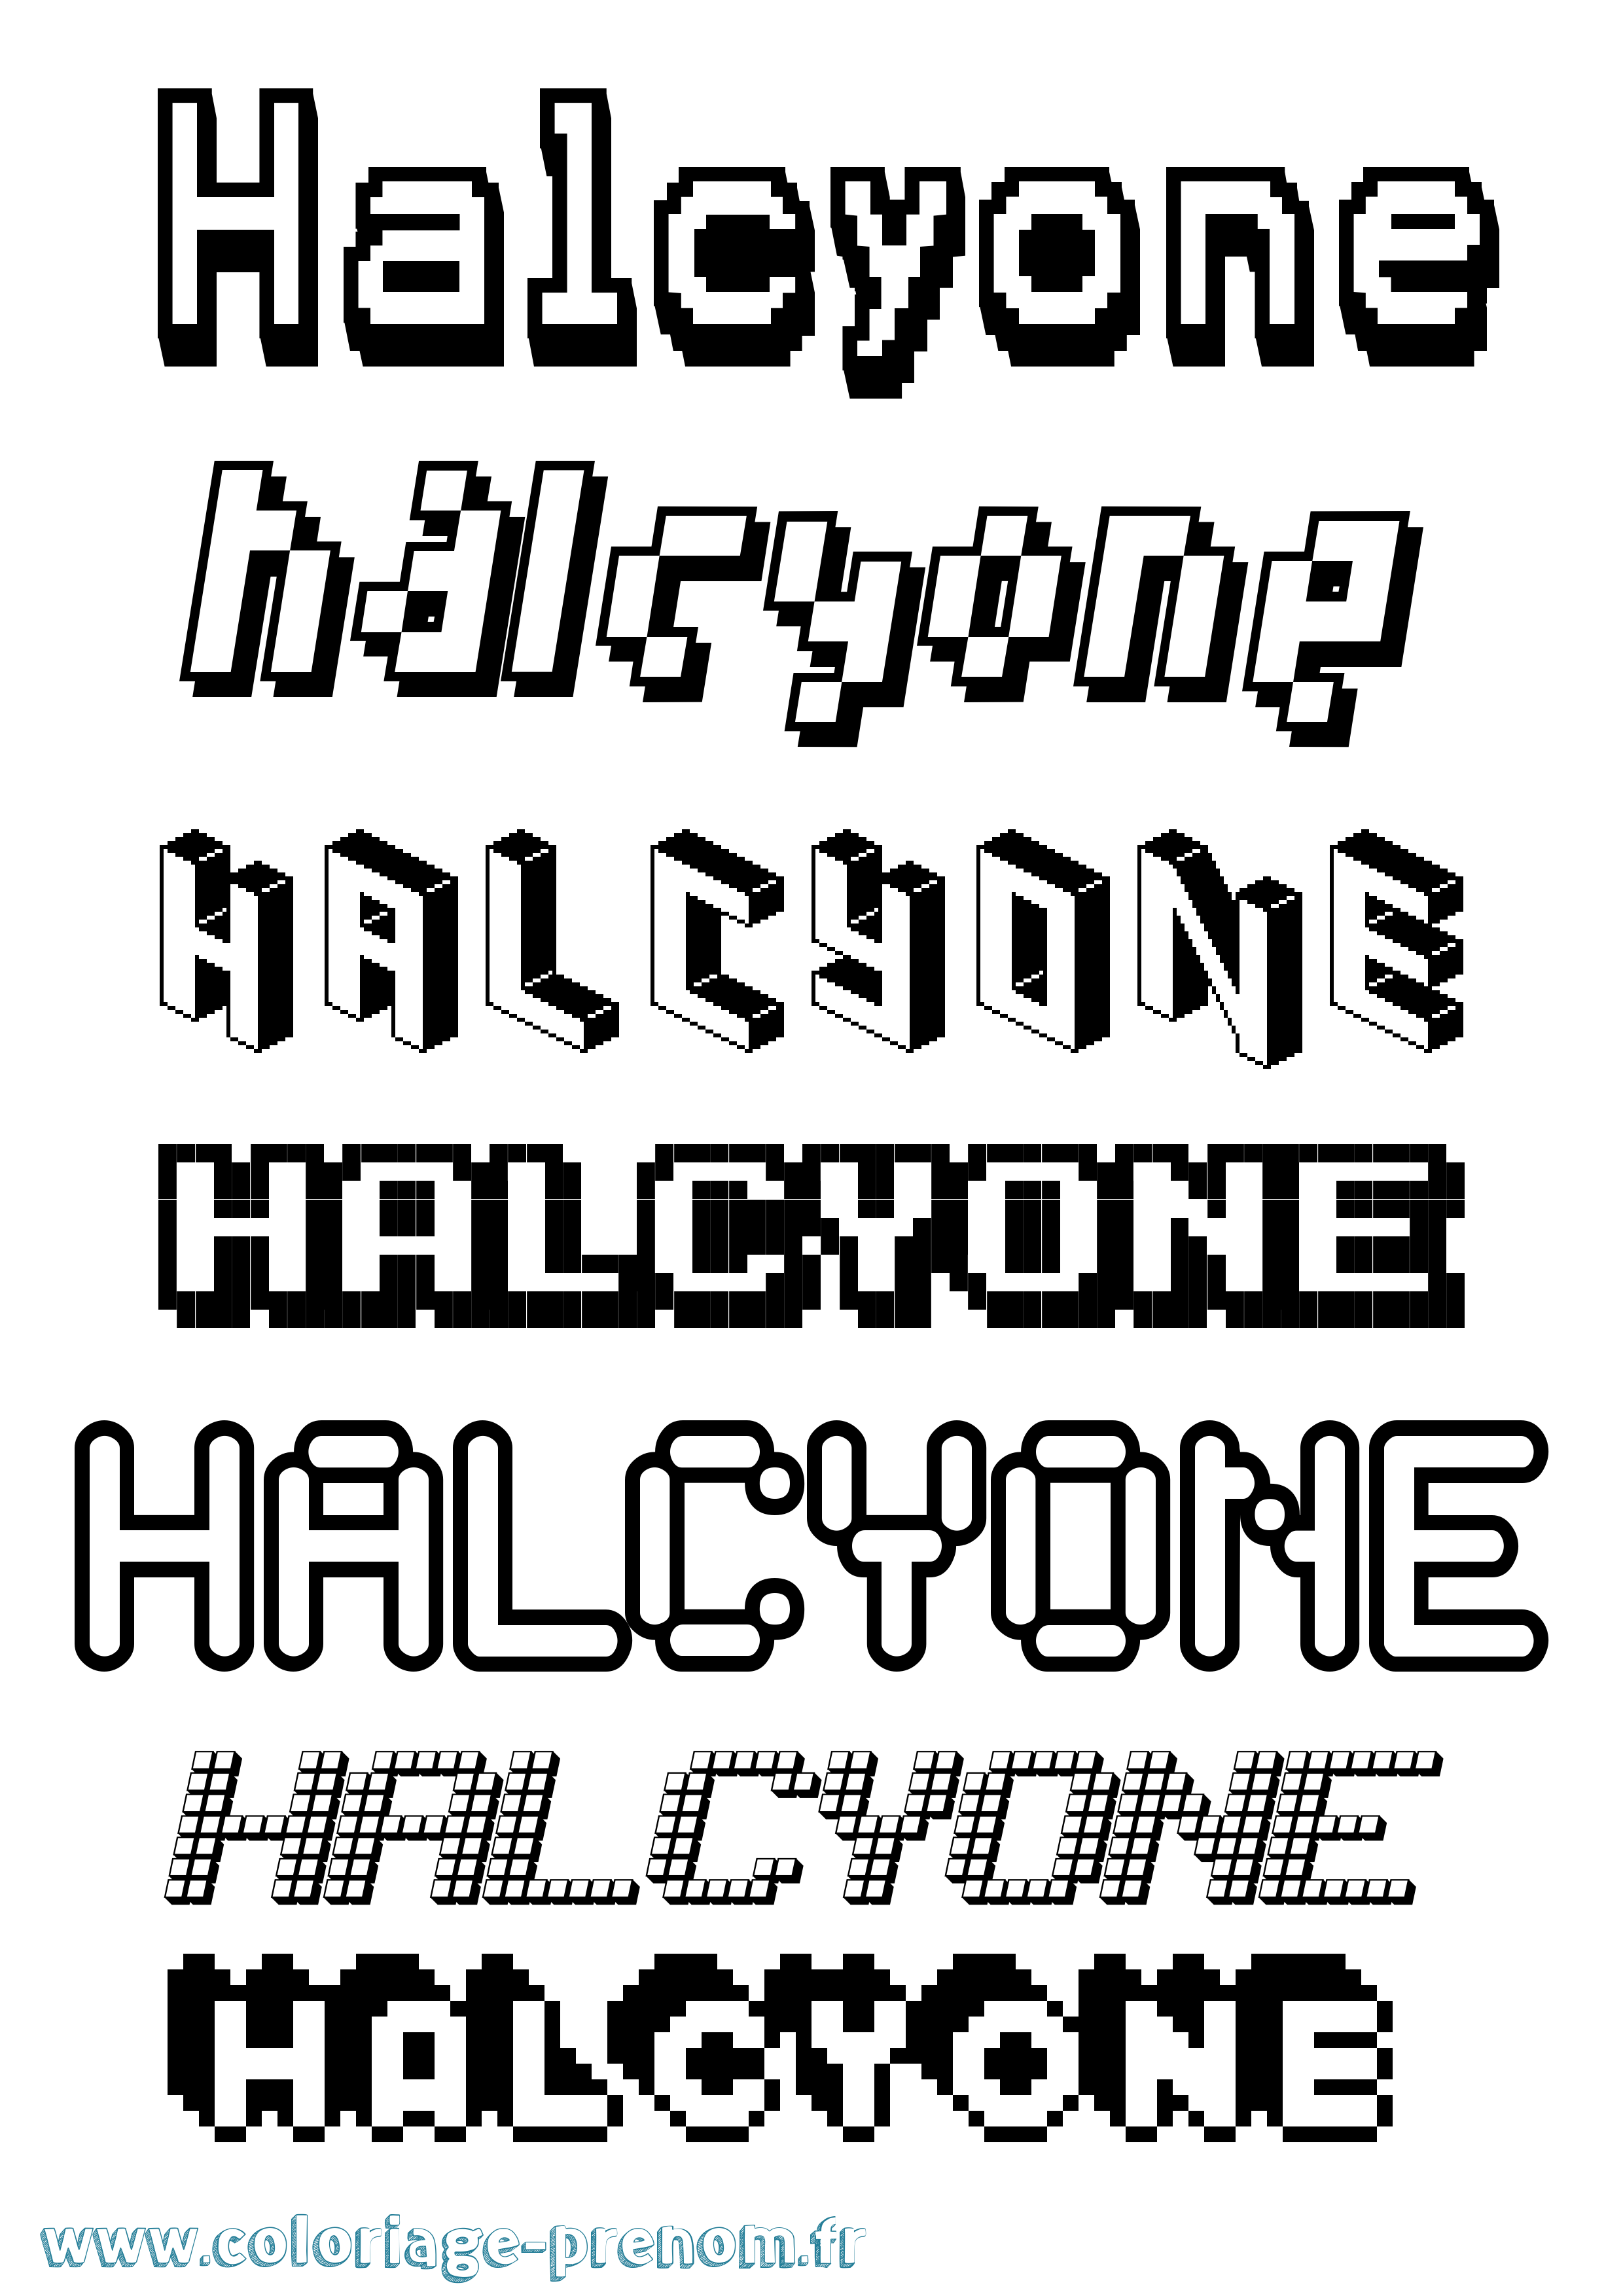 Coloriage prénom Halcyone Pixel